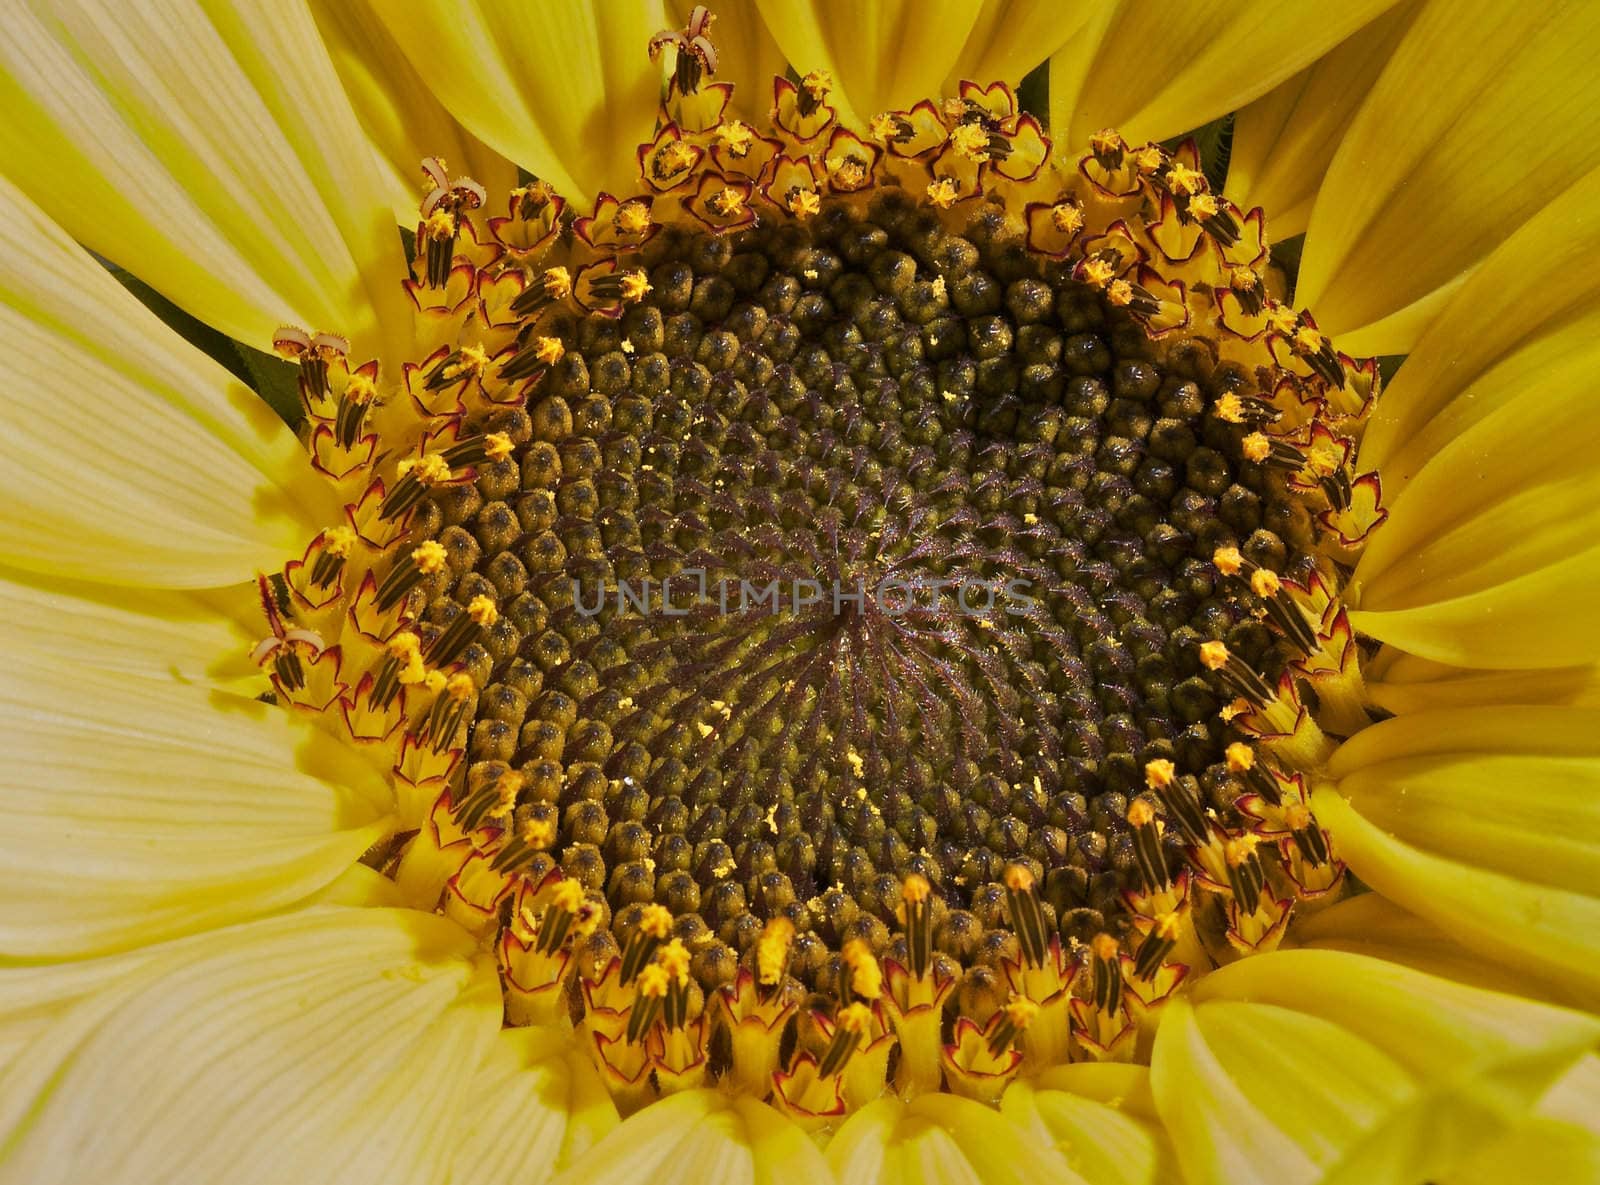 Center of Sunflower by bobkeenan